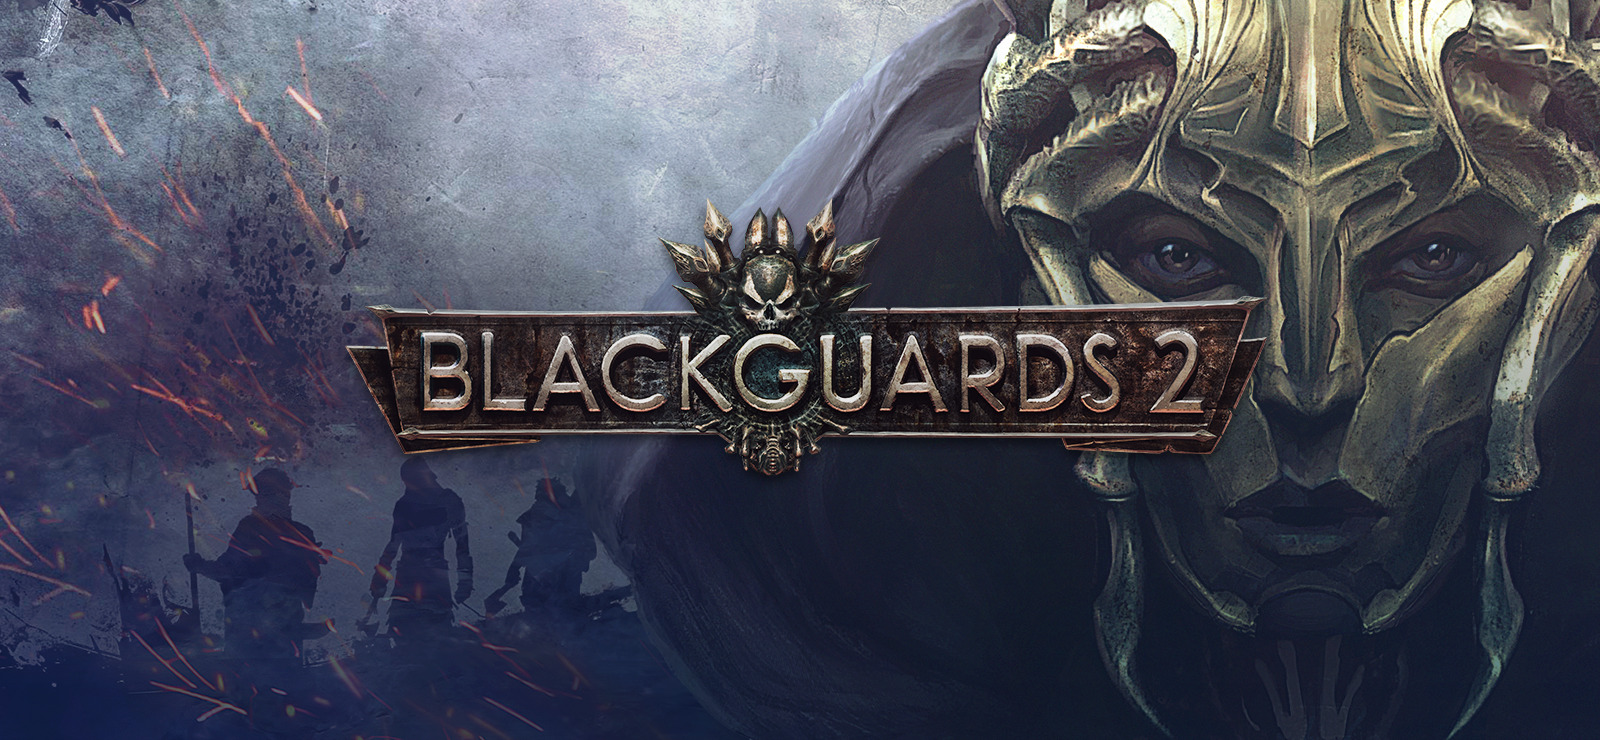 blackguards and blackguards 2